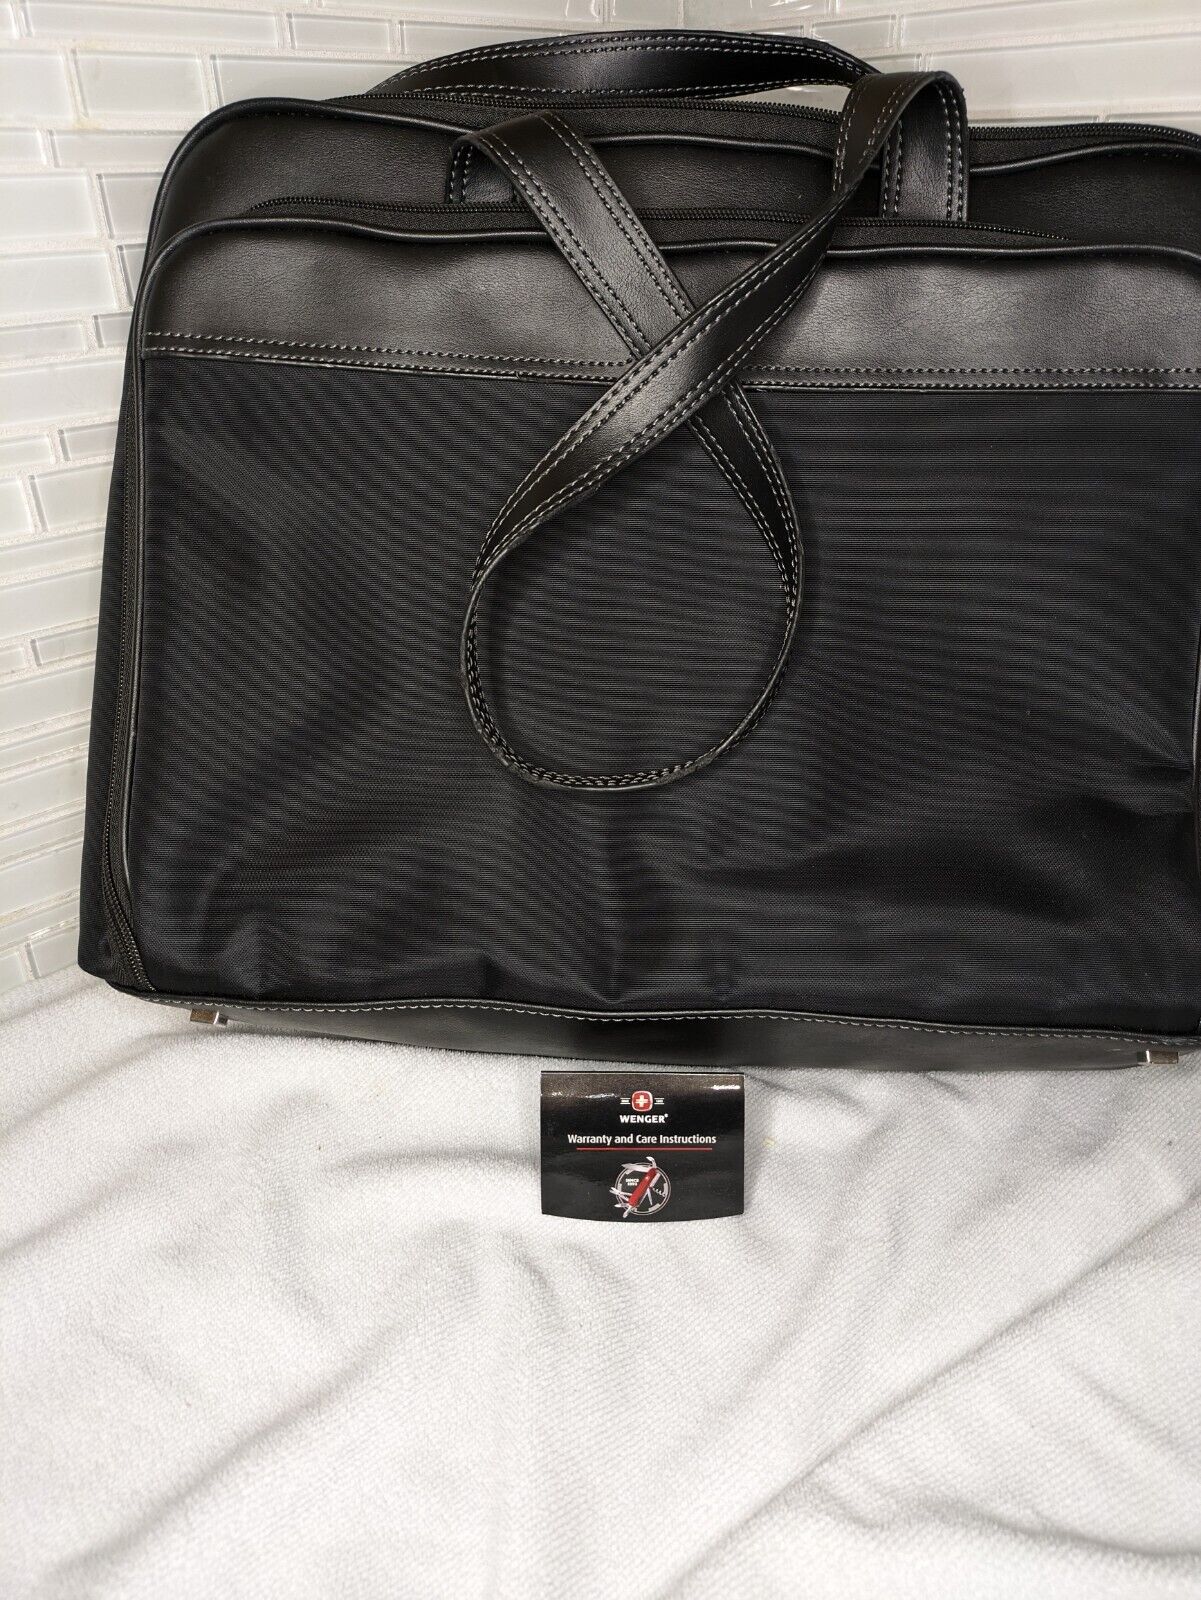 Wenger Swiss Computer Laptop Bag/Briefcase + Accessory Bag Gear Rhea Black